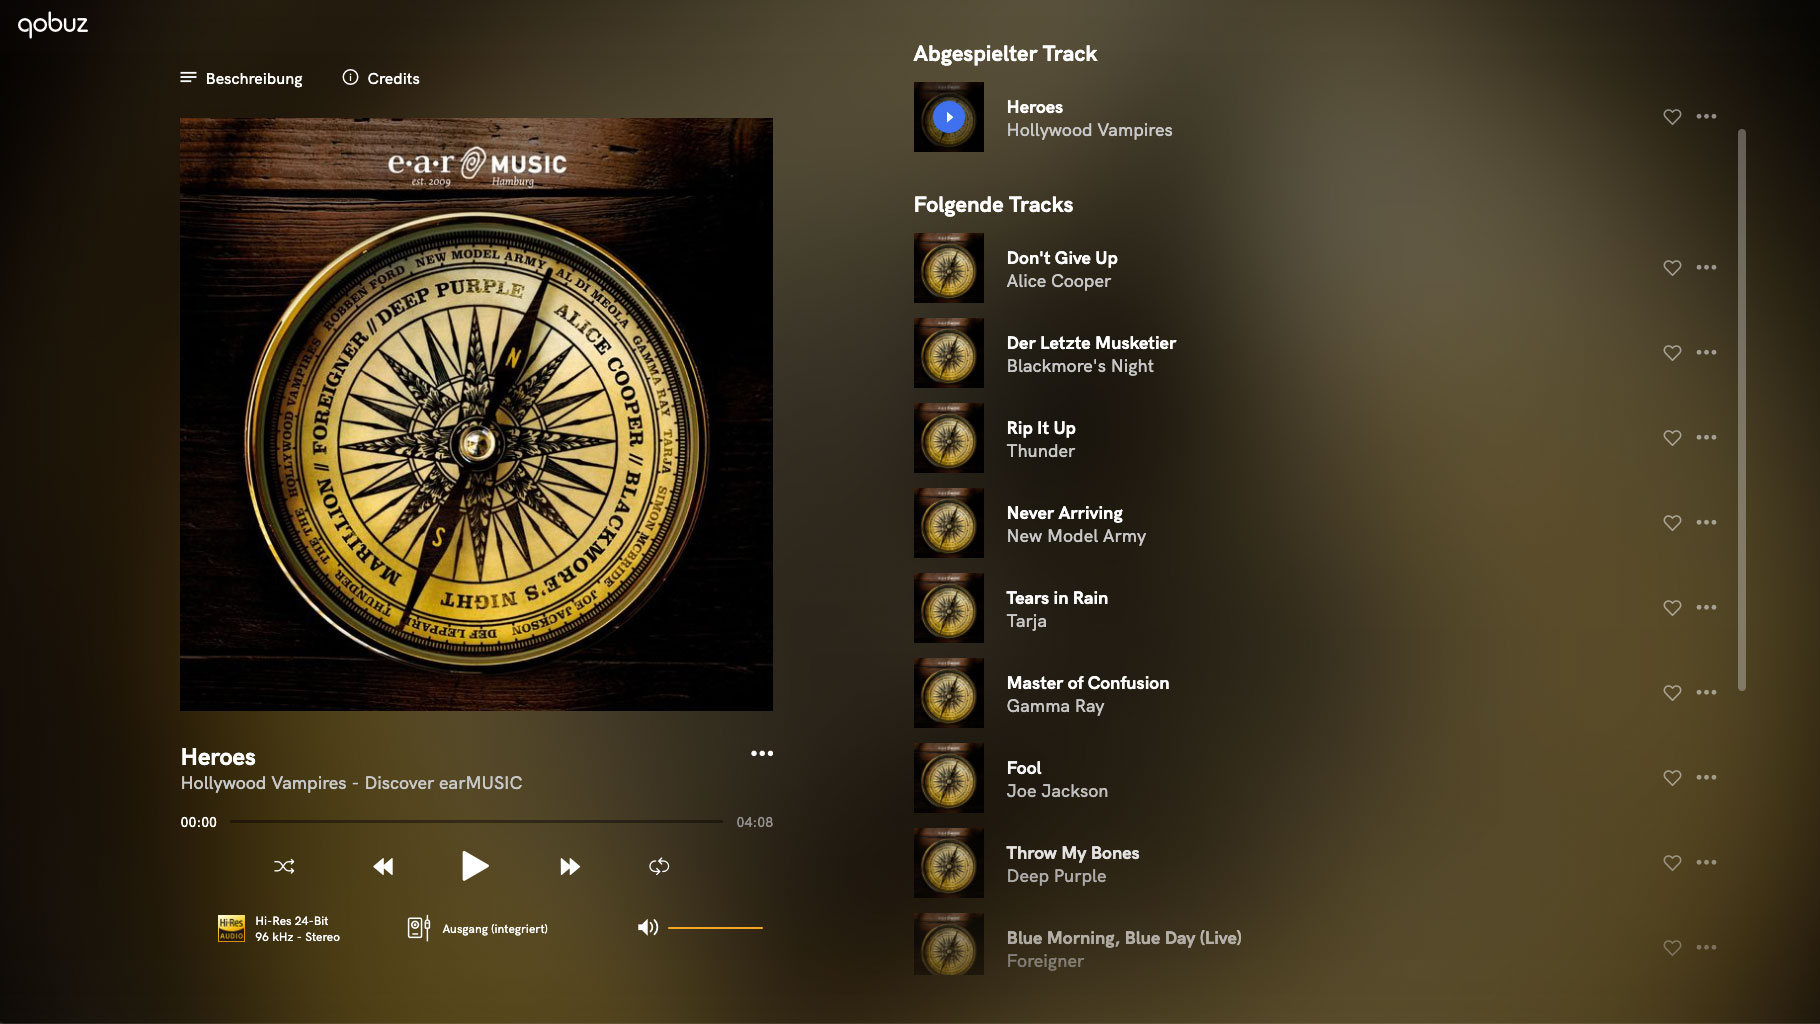 earMUSIC-Compilation bei Qobuz (Bild: Screenshot aus der Qobuz-Desktop-App)